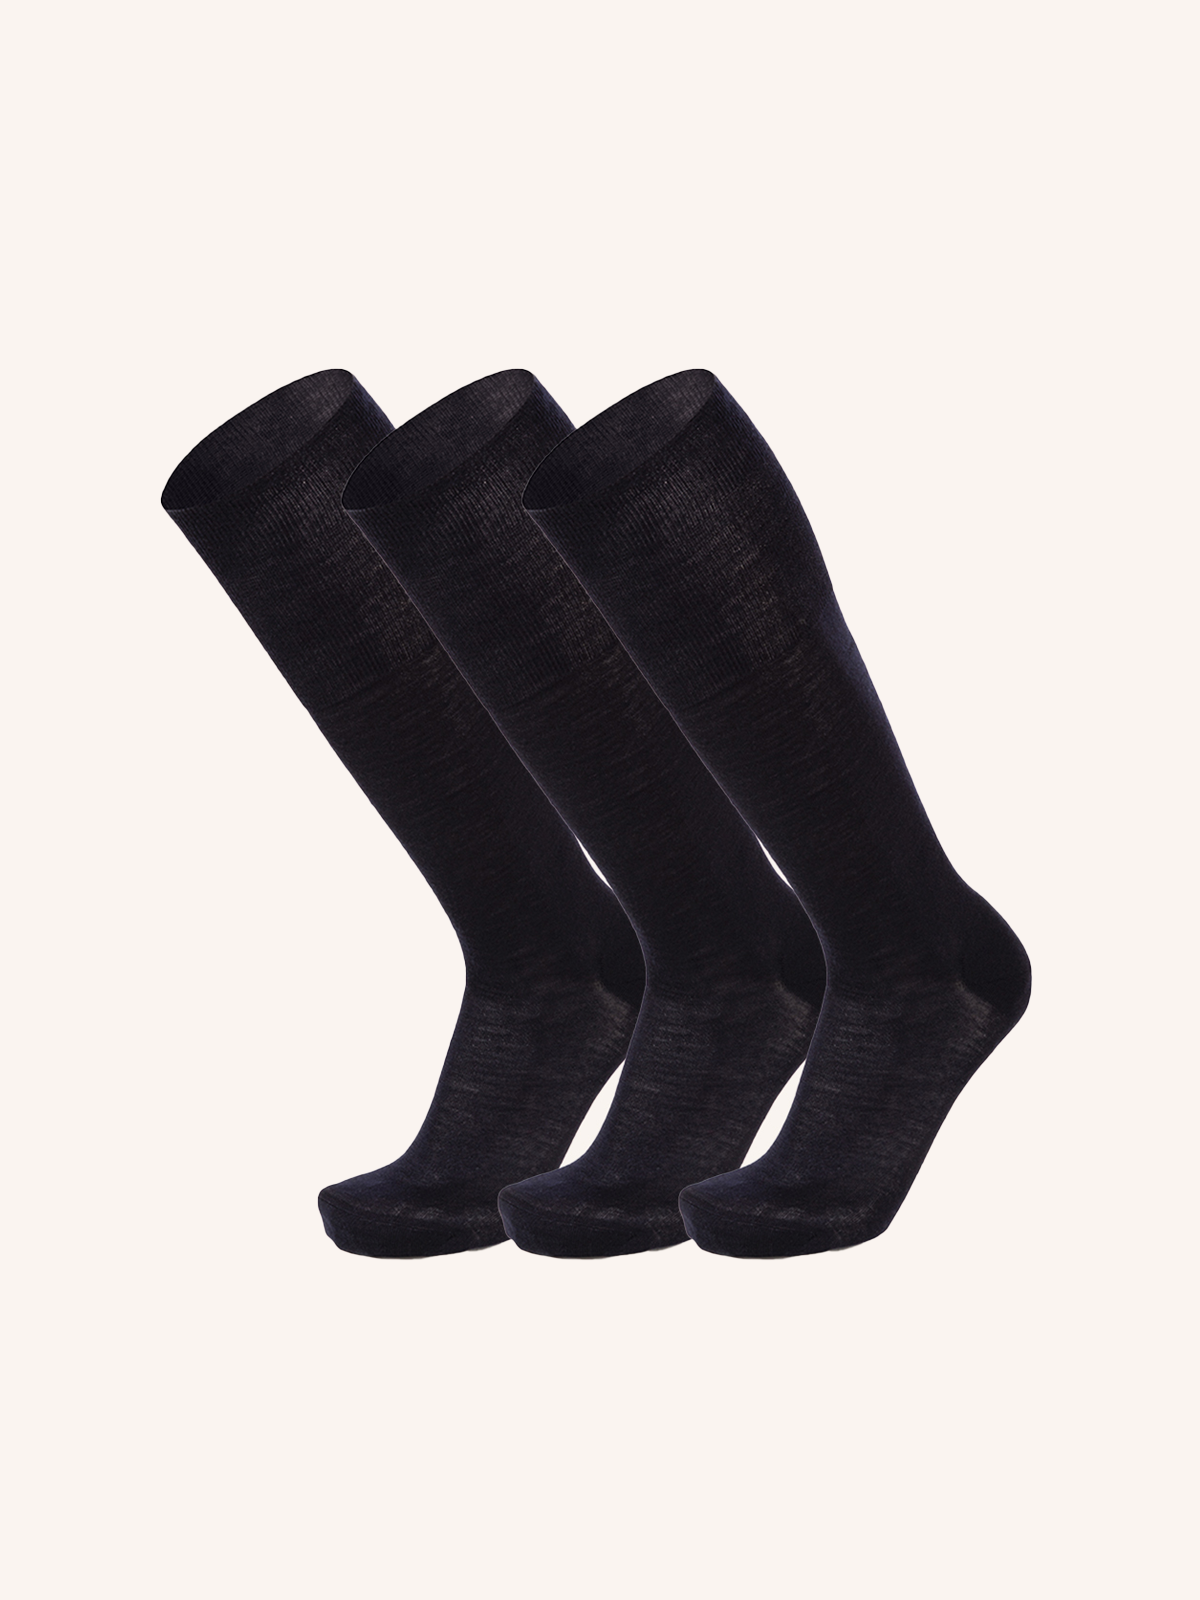 Long Socks in Fine Wool and Silk for Men | Plain Color | Pack of 3 pairs | Lanaseta